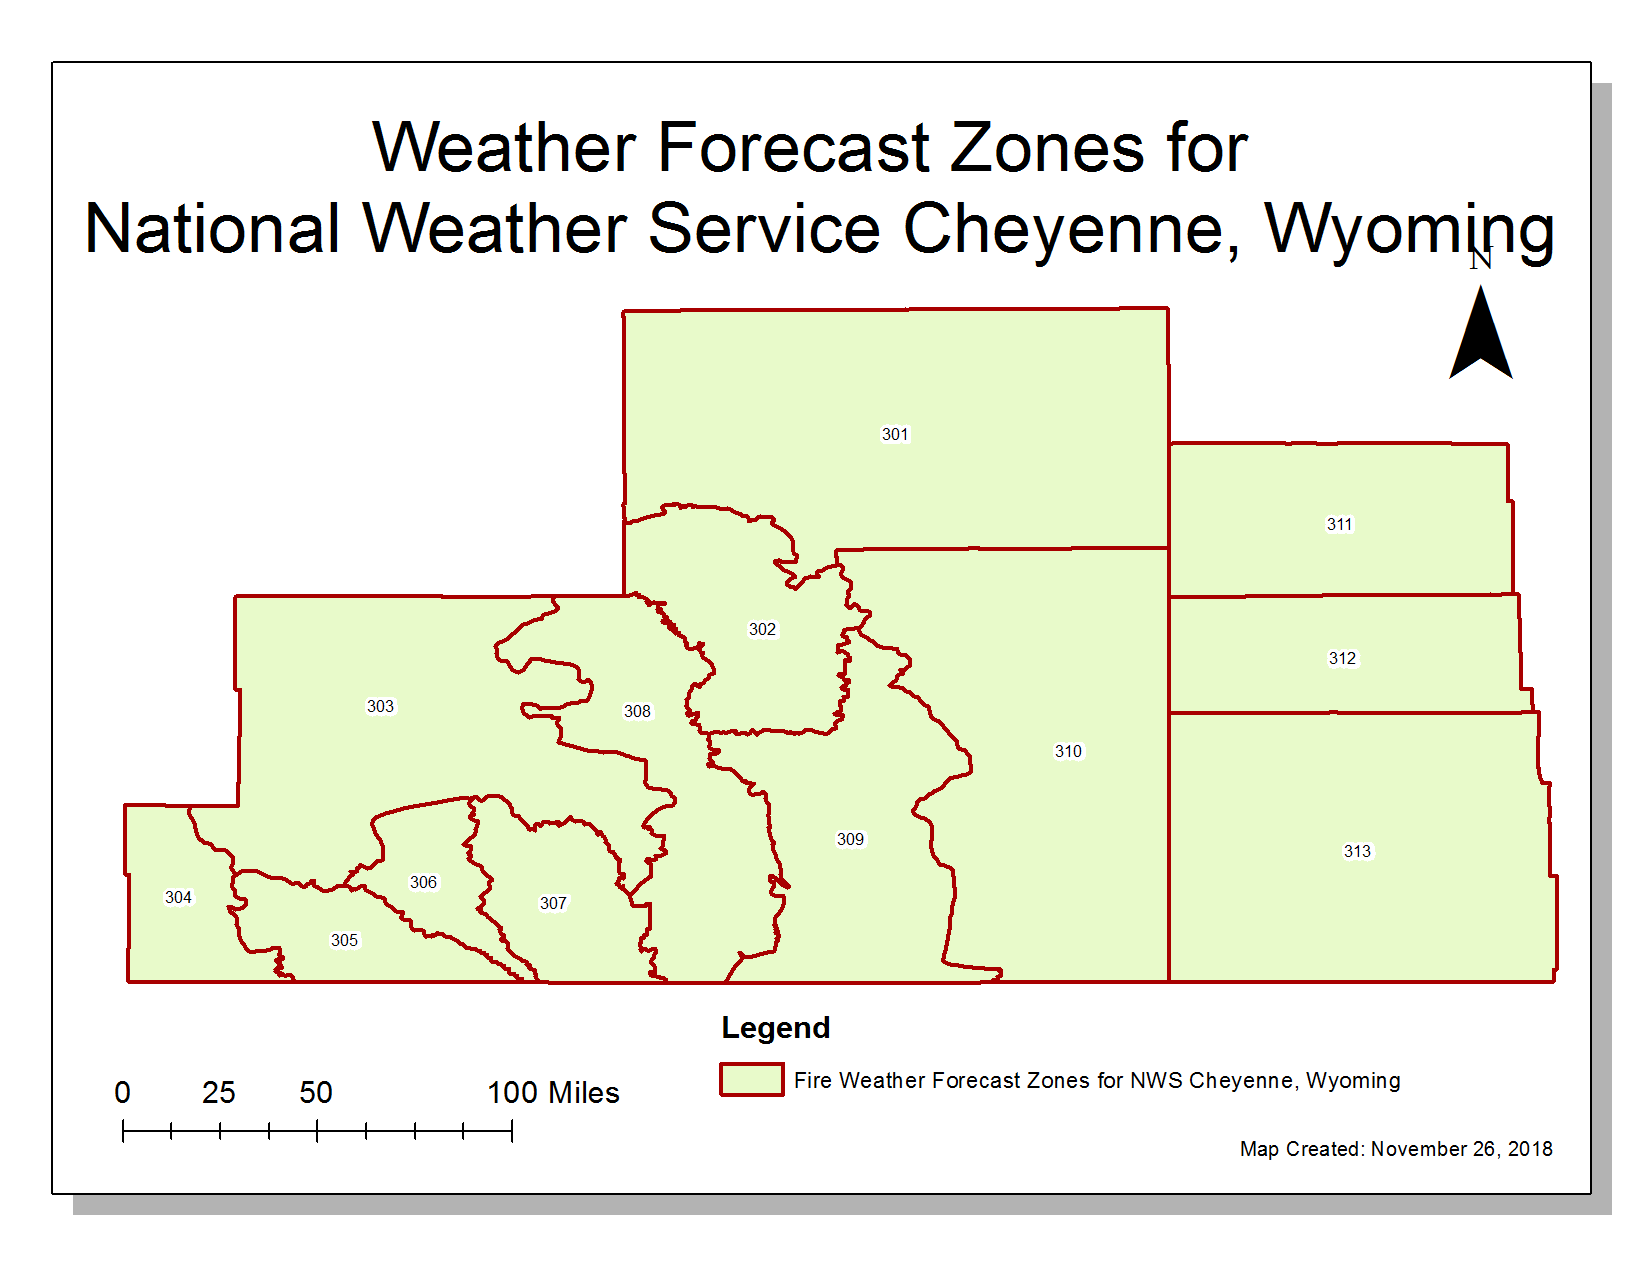 On the Nebraska Side of Forecast Zones:Â NEZ002 (Dawes), NEZ003 (Box Butte), NEZ019 (Scotts Bluff), NEZ020 (Banner), NEZ021 (Morrill), NEZ054 (Kimball), NEZ055 (Cheyenne), NEZ095 (North Sioux), and NEZ096 (South Sioux).